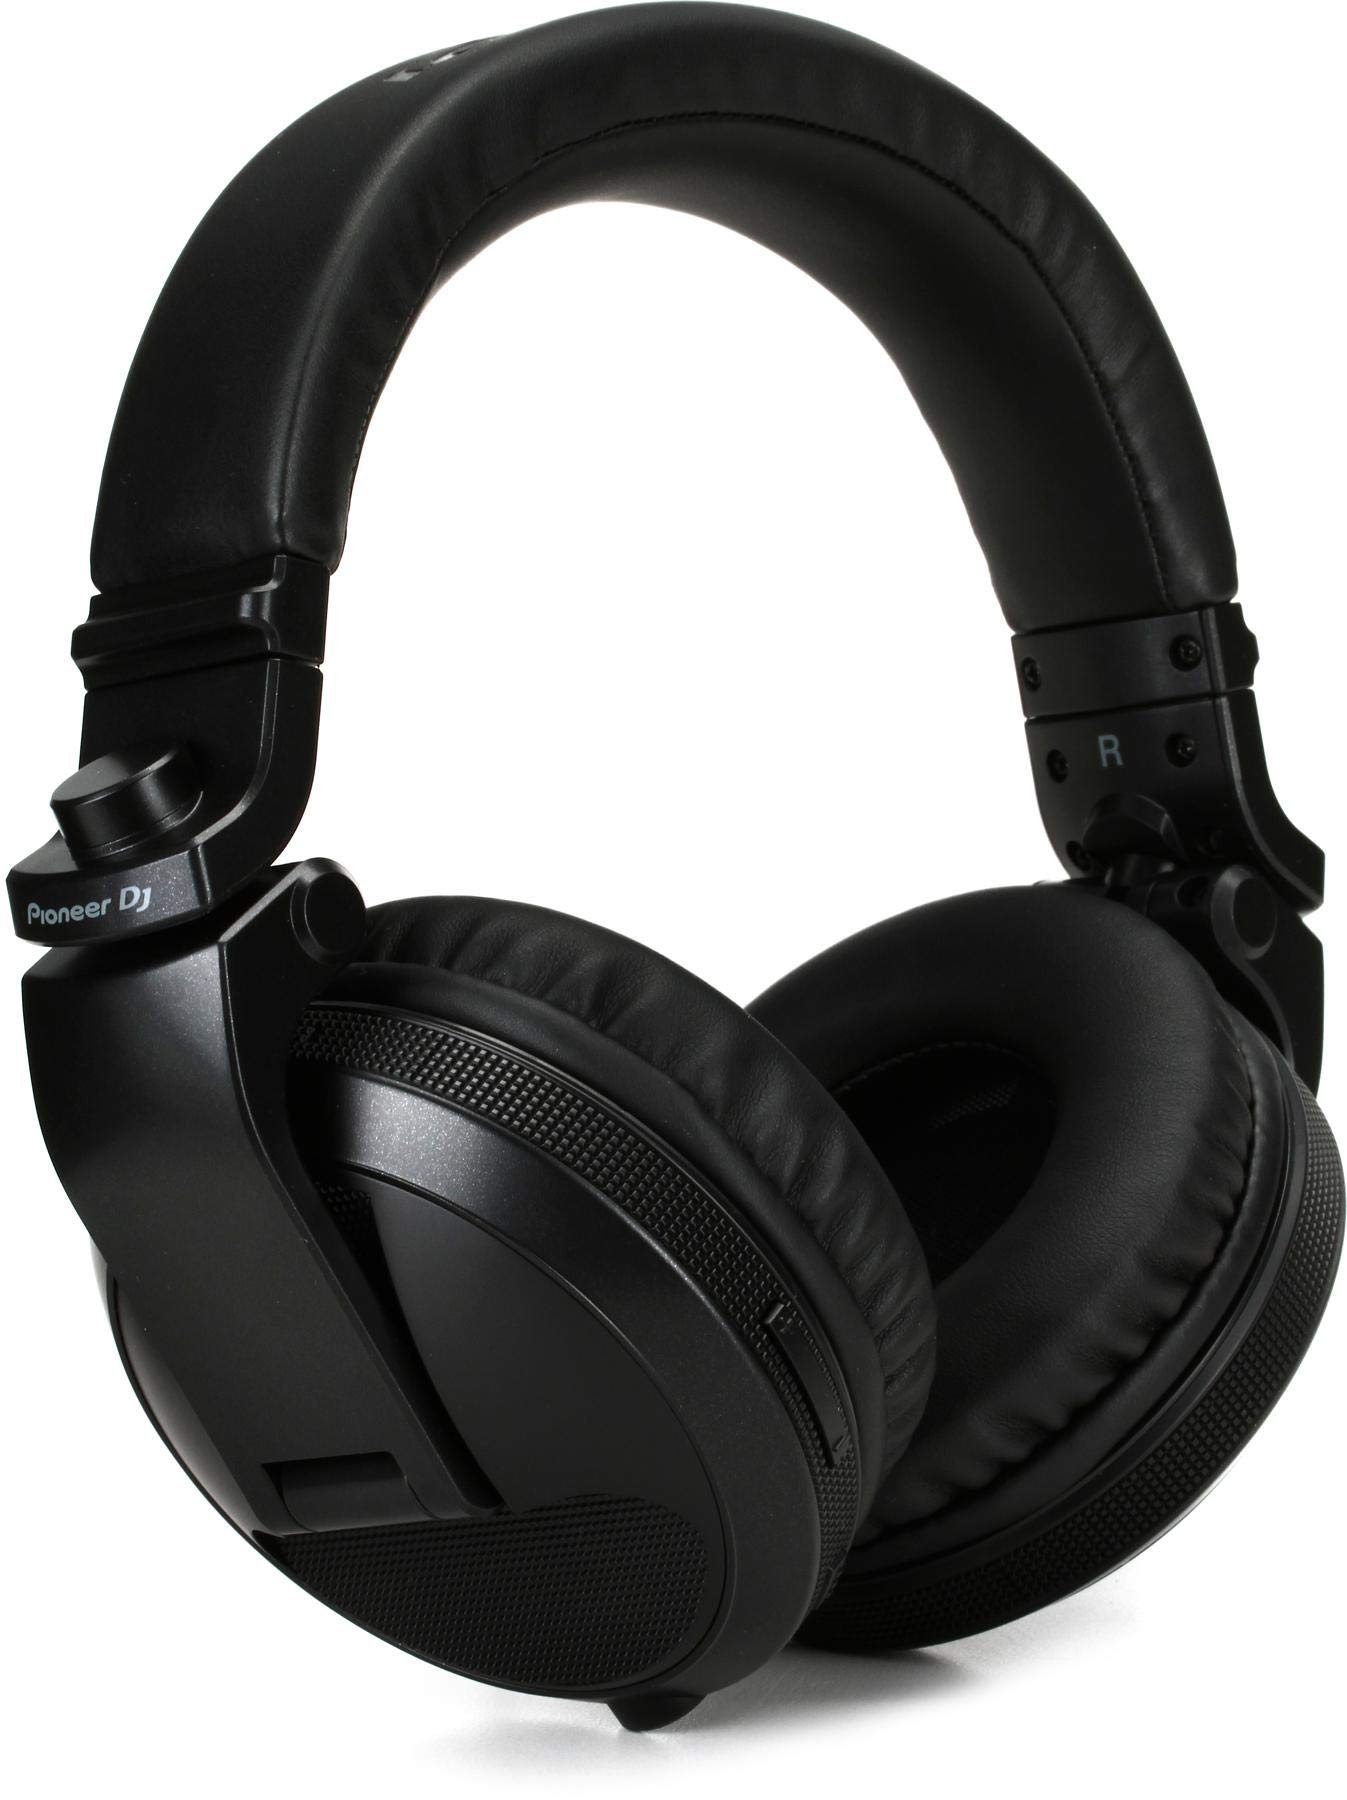 Pioneer DJ HDJ-X5BT 专业蓝牙 DJ 耳机 - 黑色